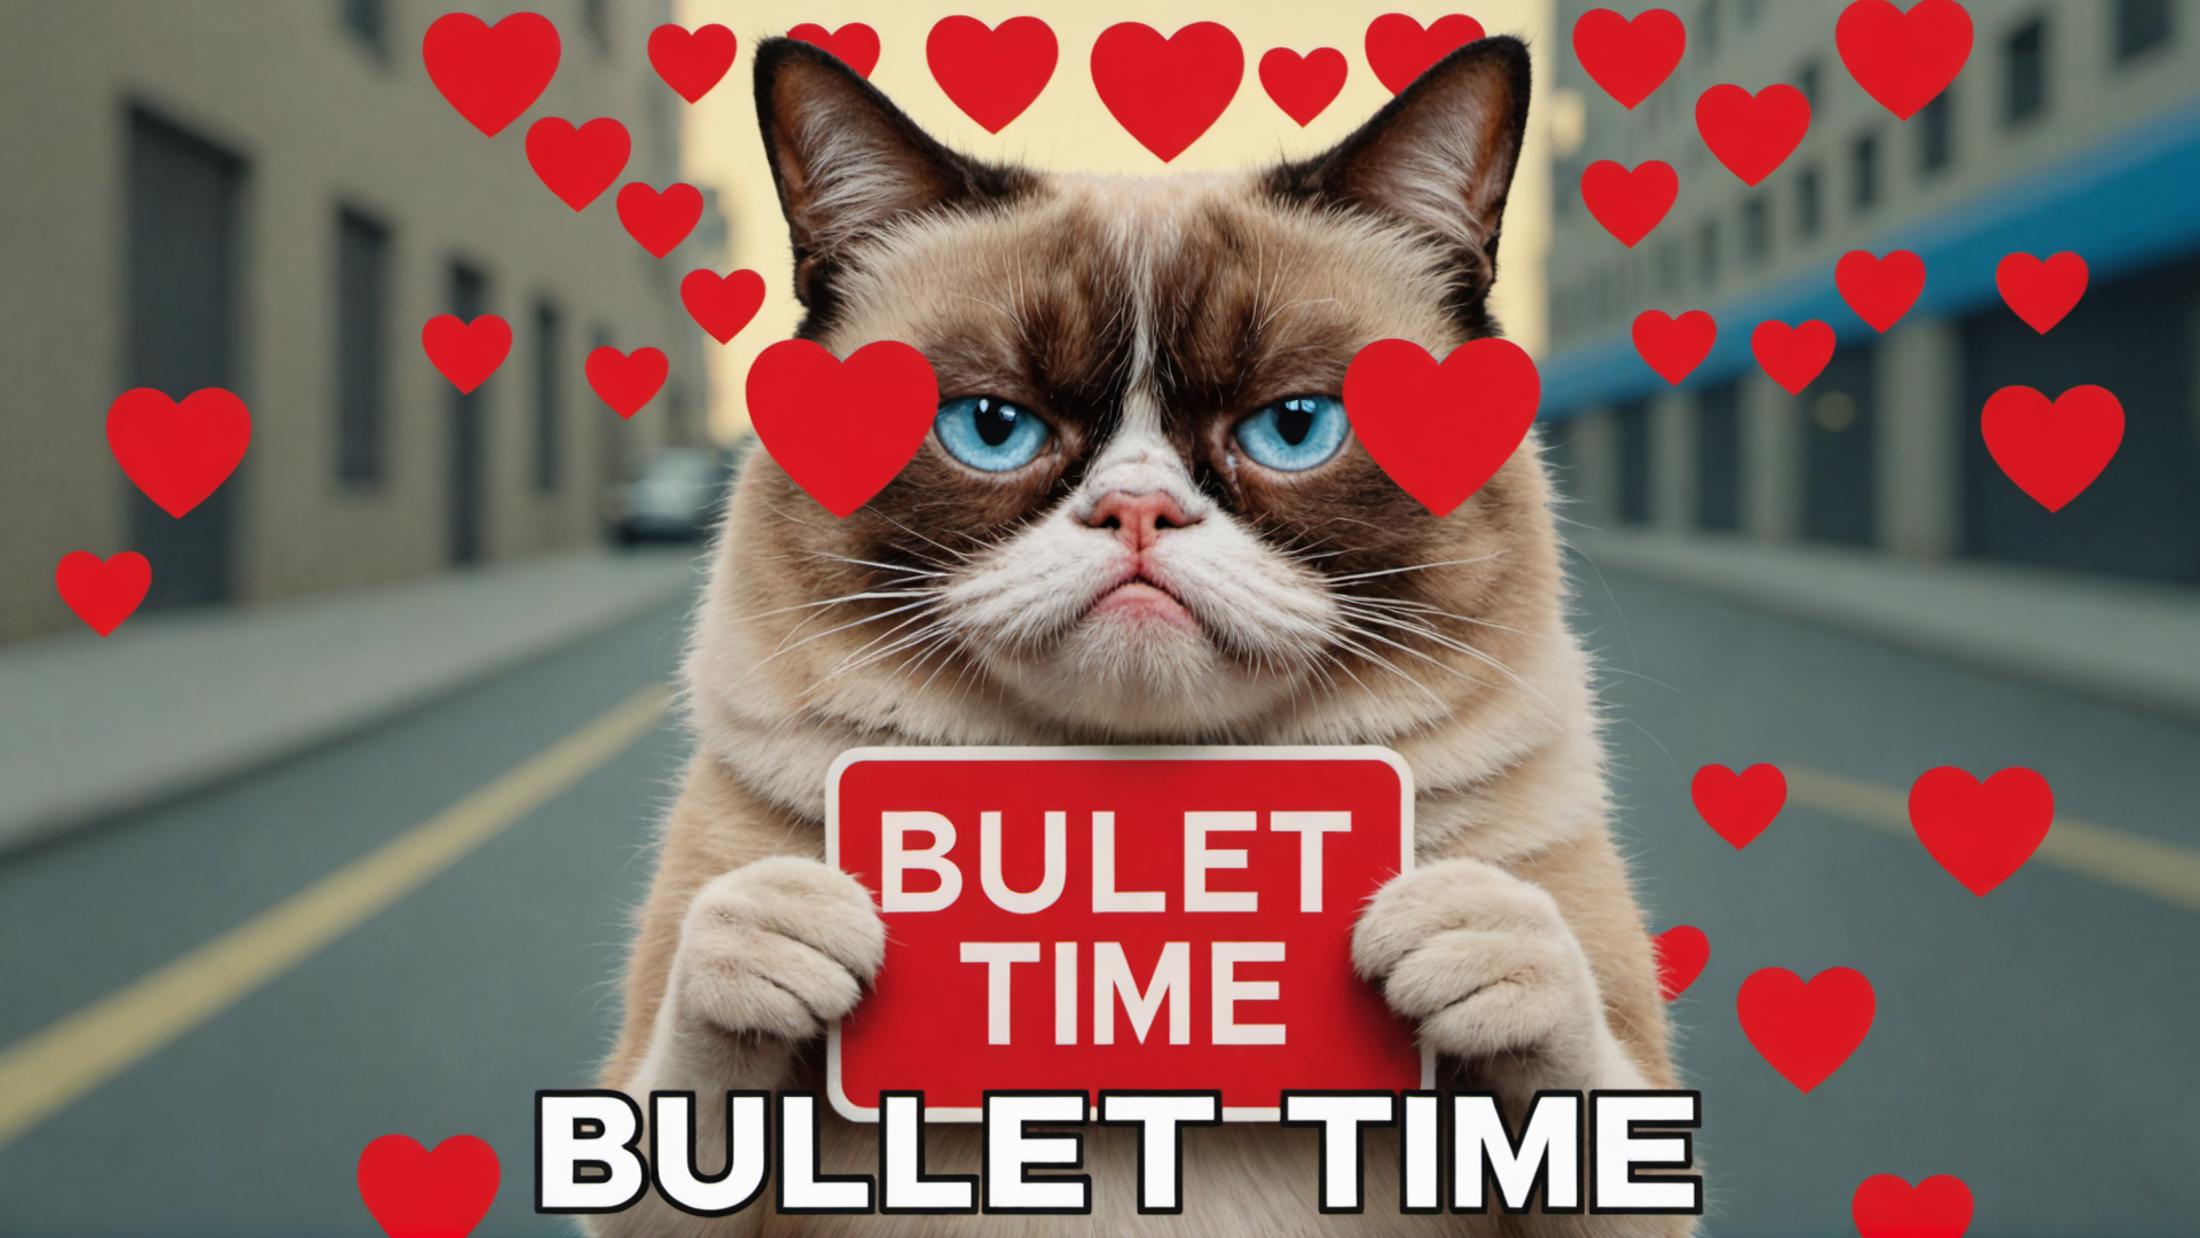 Memes XL "Bullet Time" image by skratch4merz916